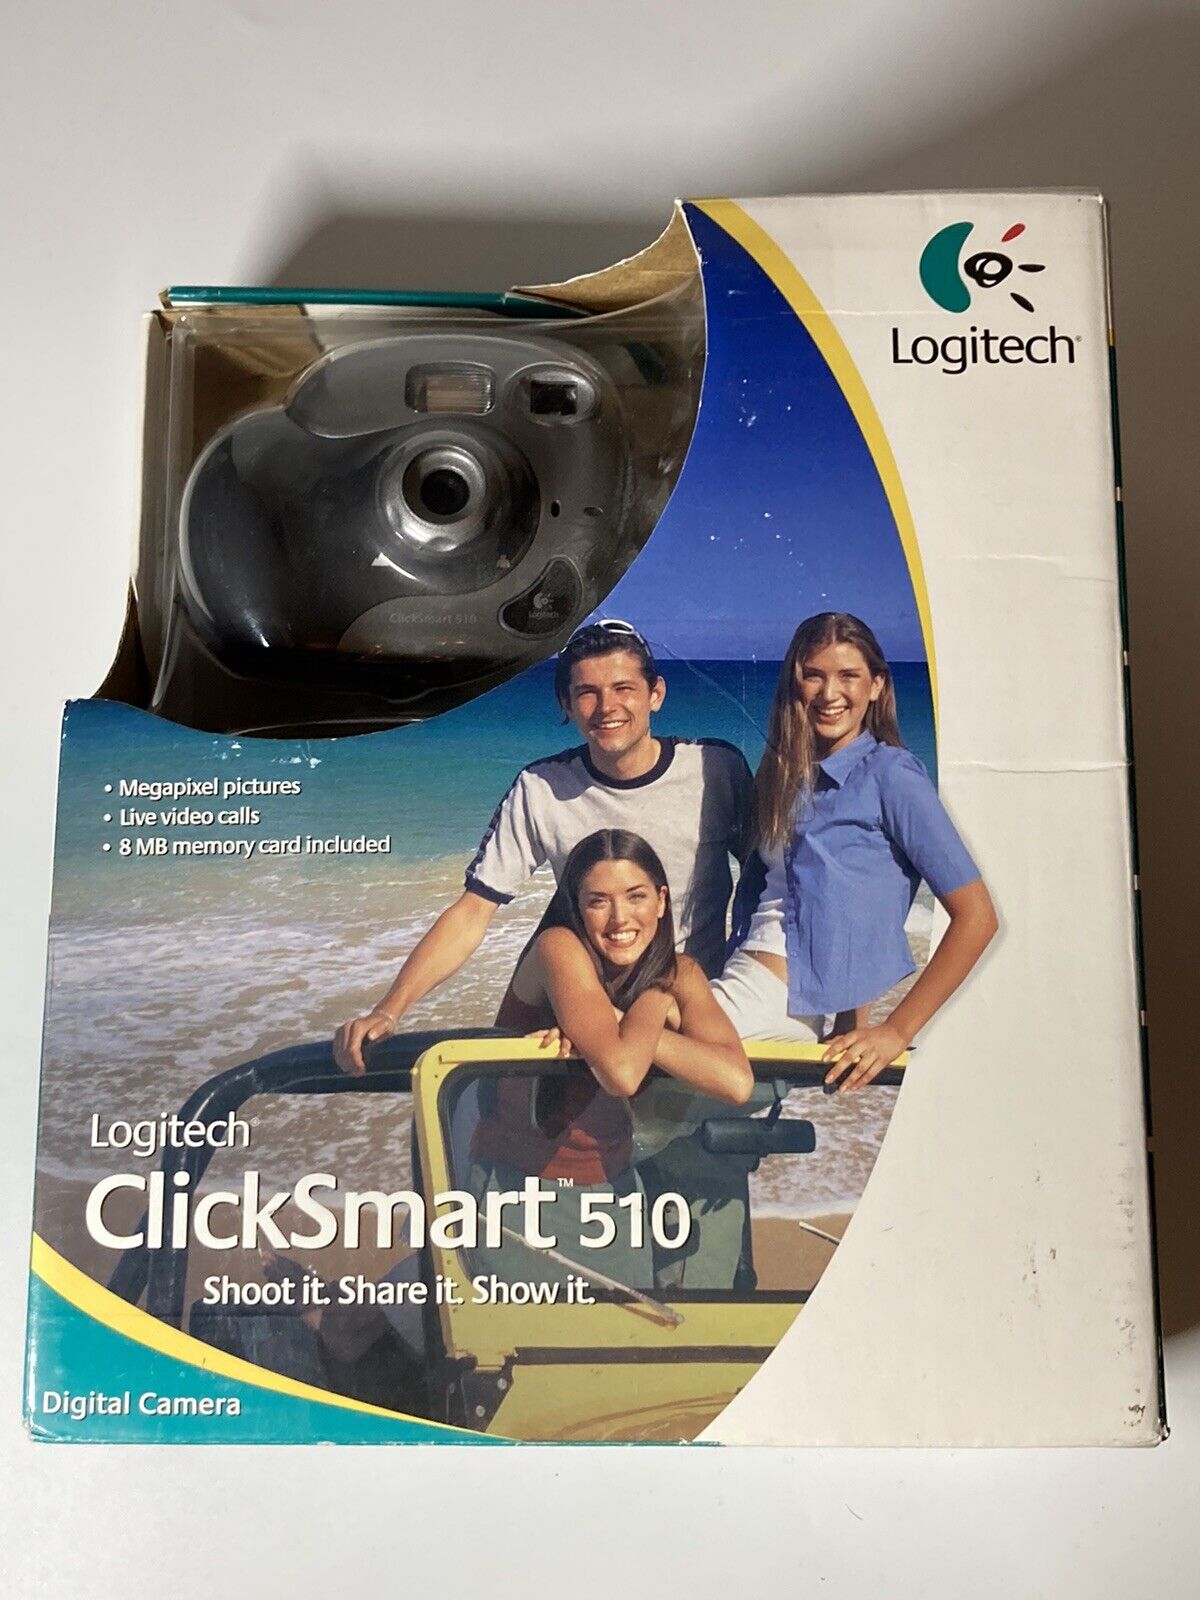 NEW Logitech Clicksmart 510 Digital Camera 1.3 Megapixel 8MB Memory Mic Flash